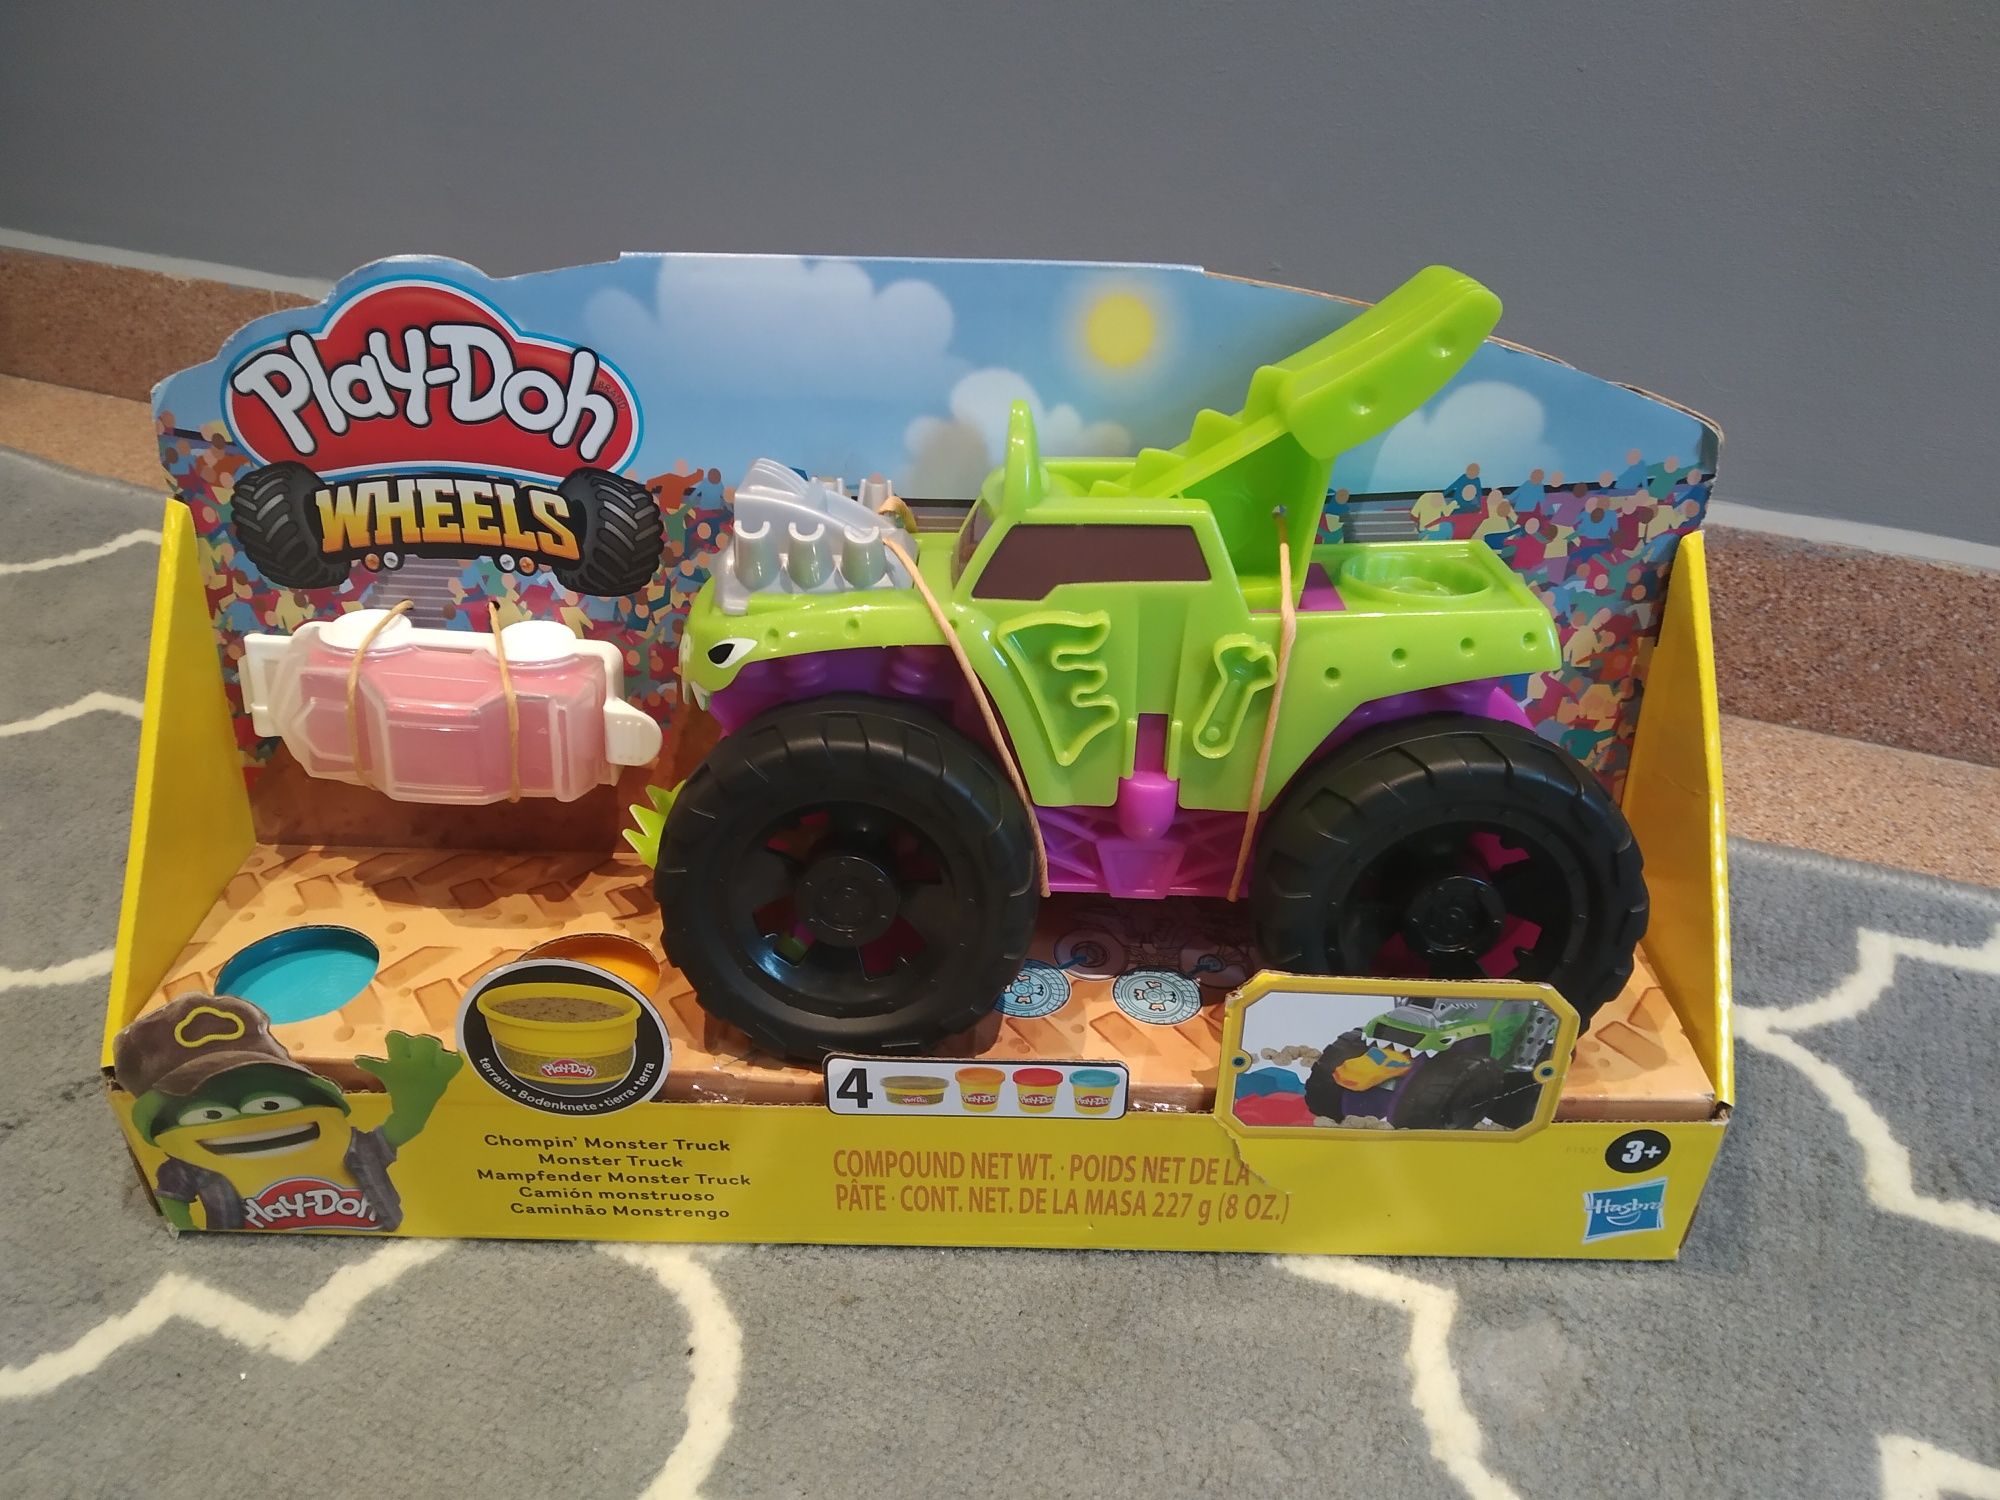 Ciastolina Play Doh Wheels Monster truck